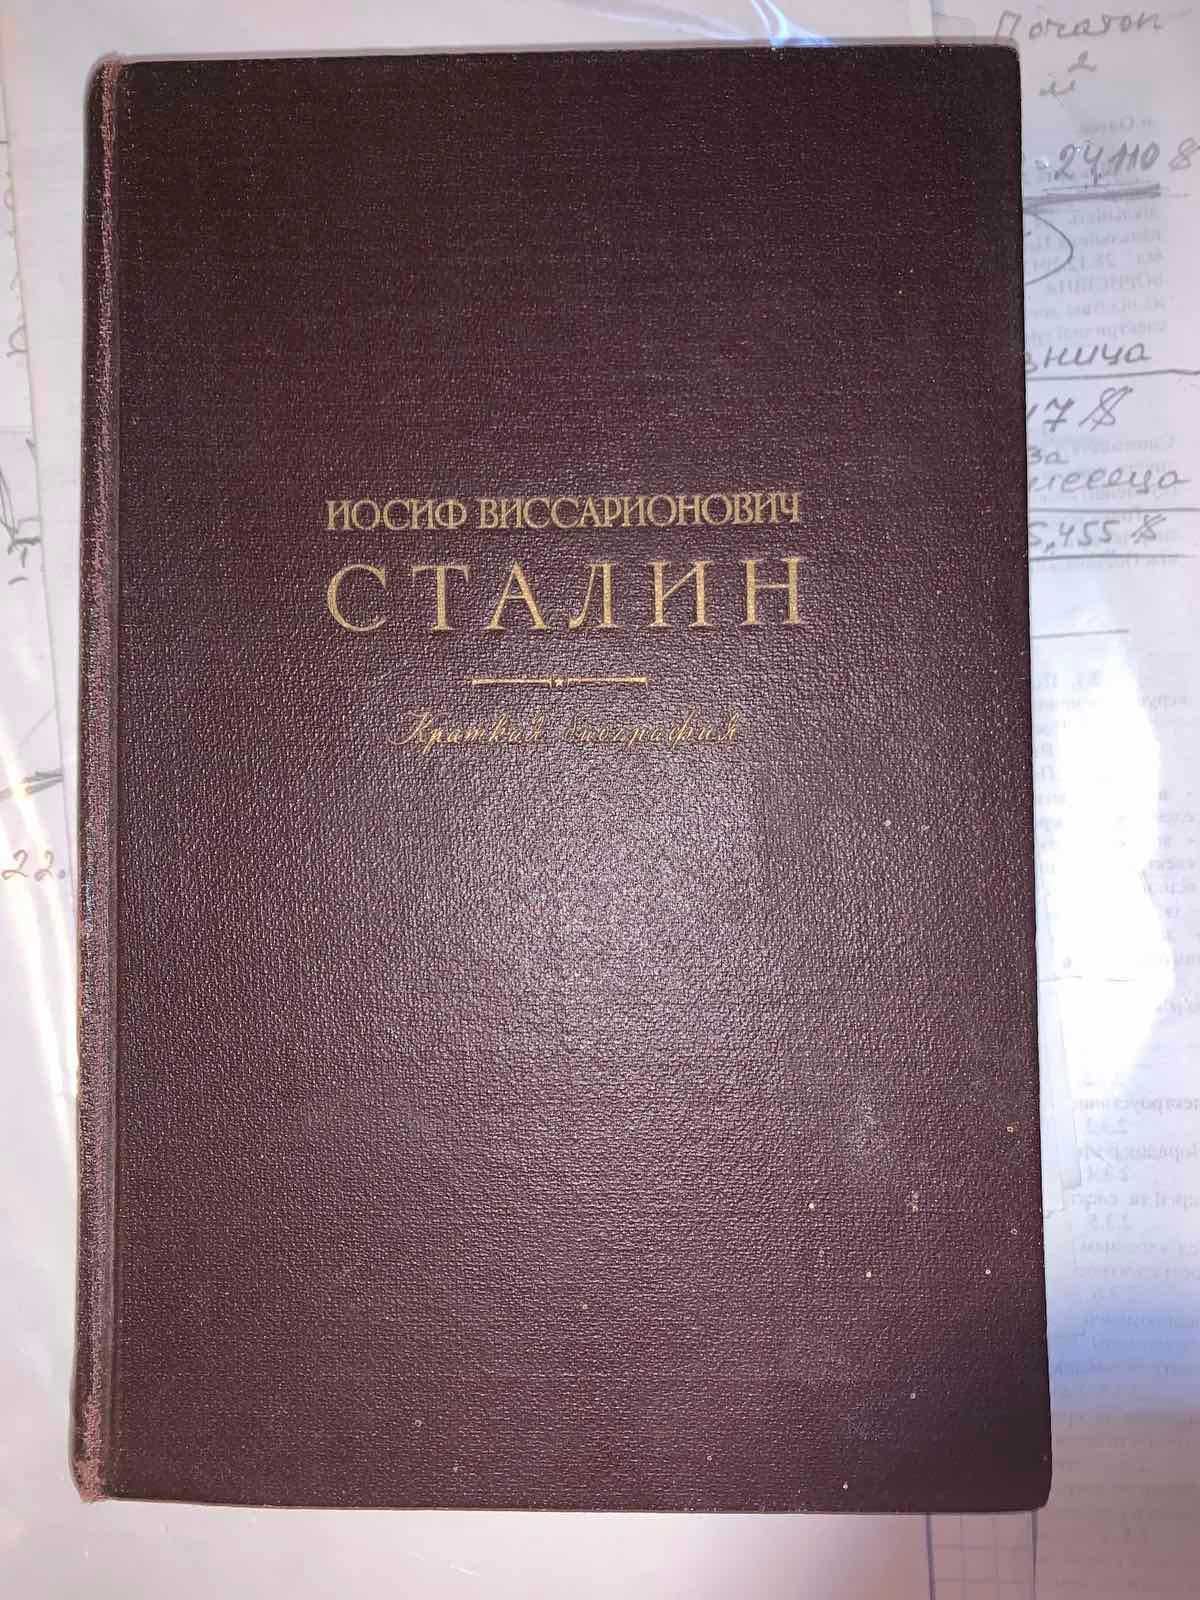 Краткая биография Сталина 1947г.